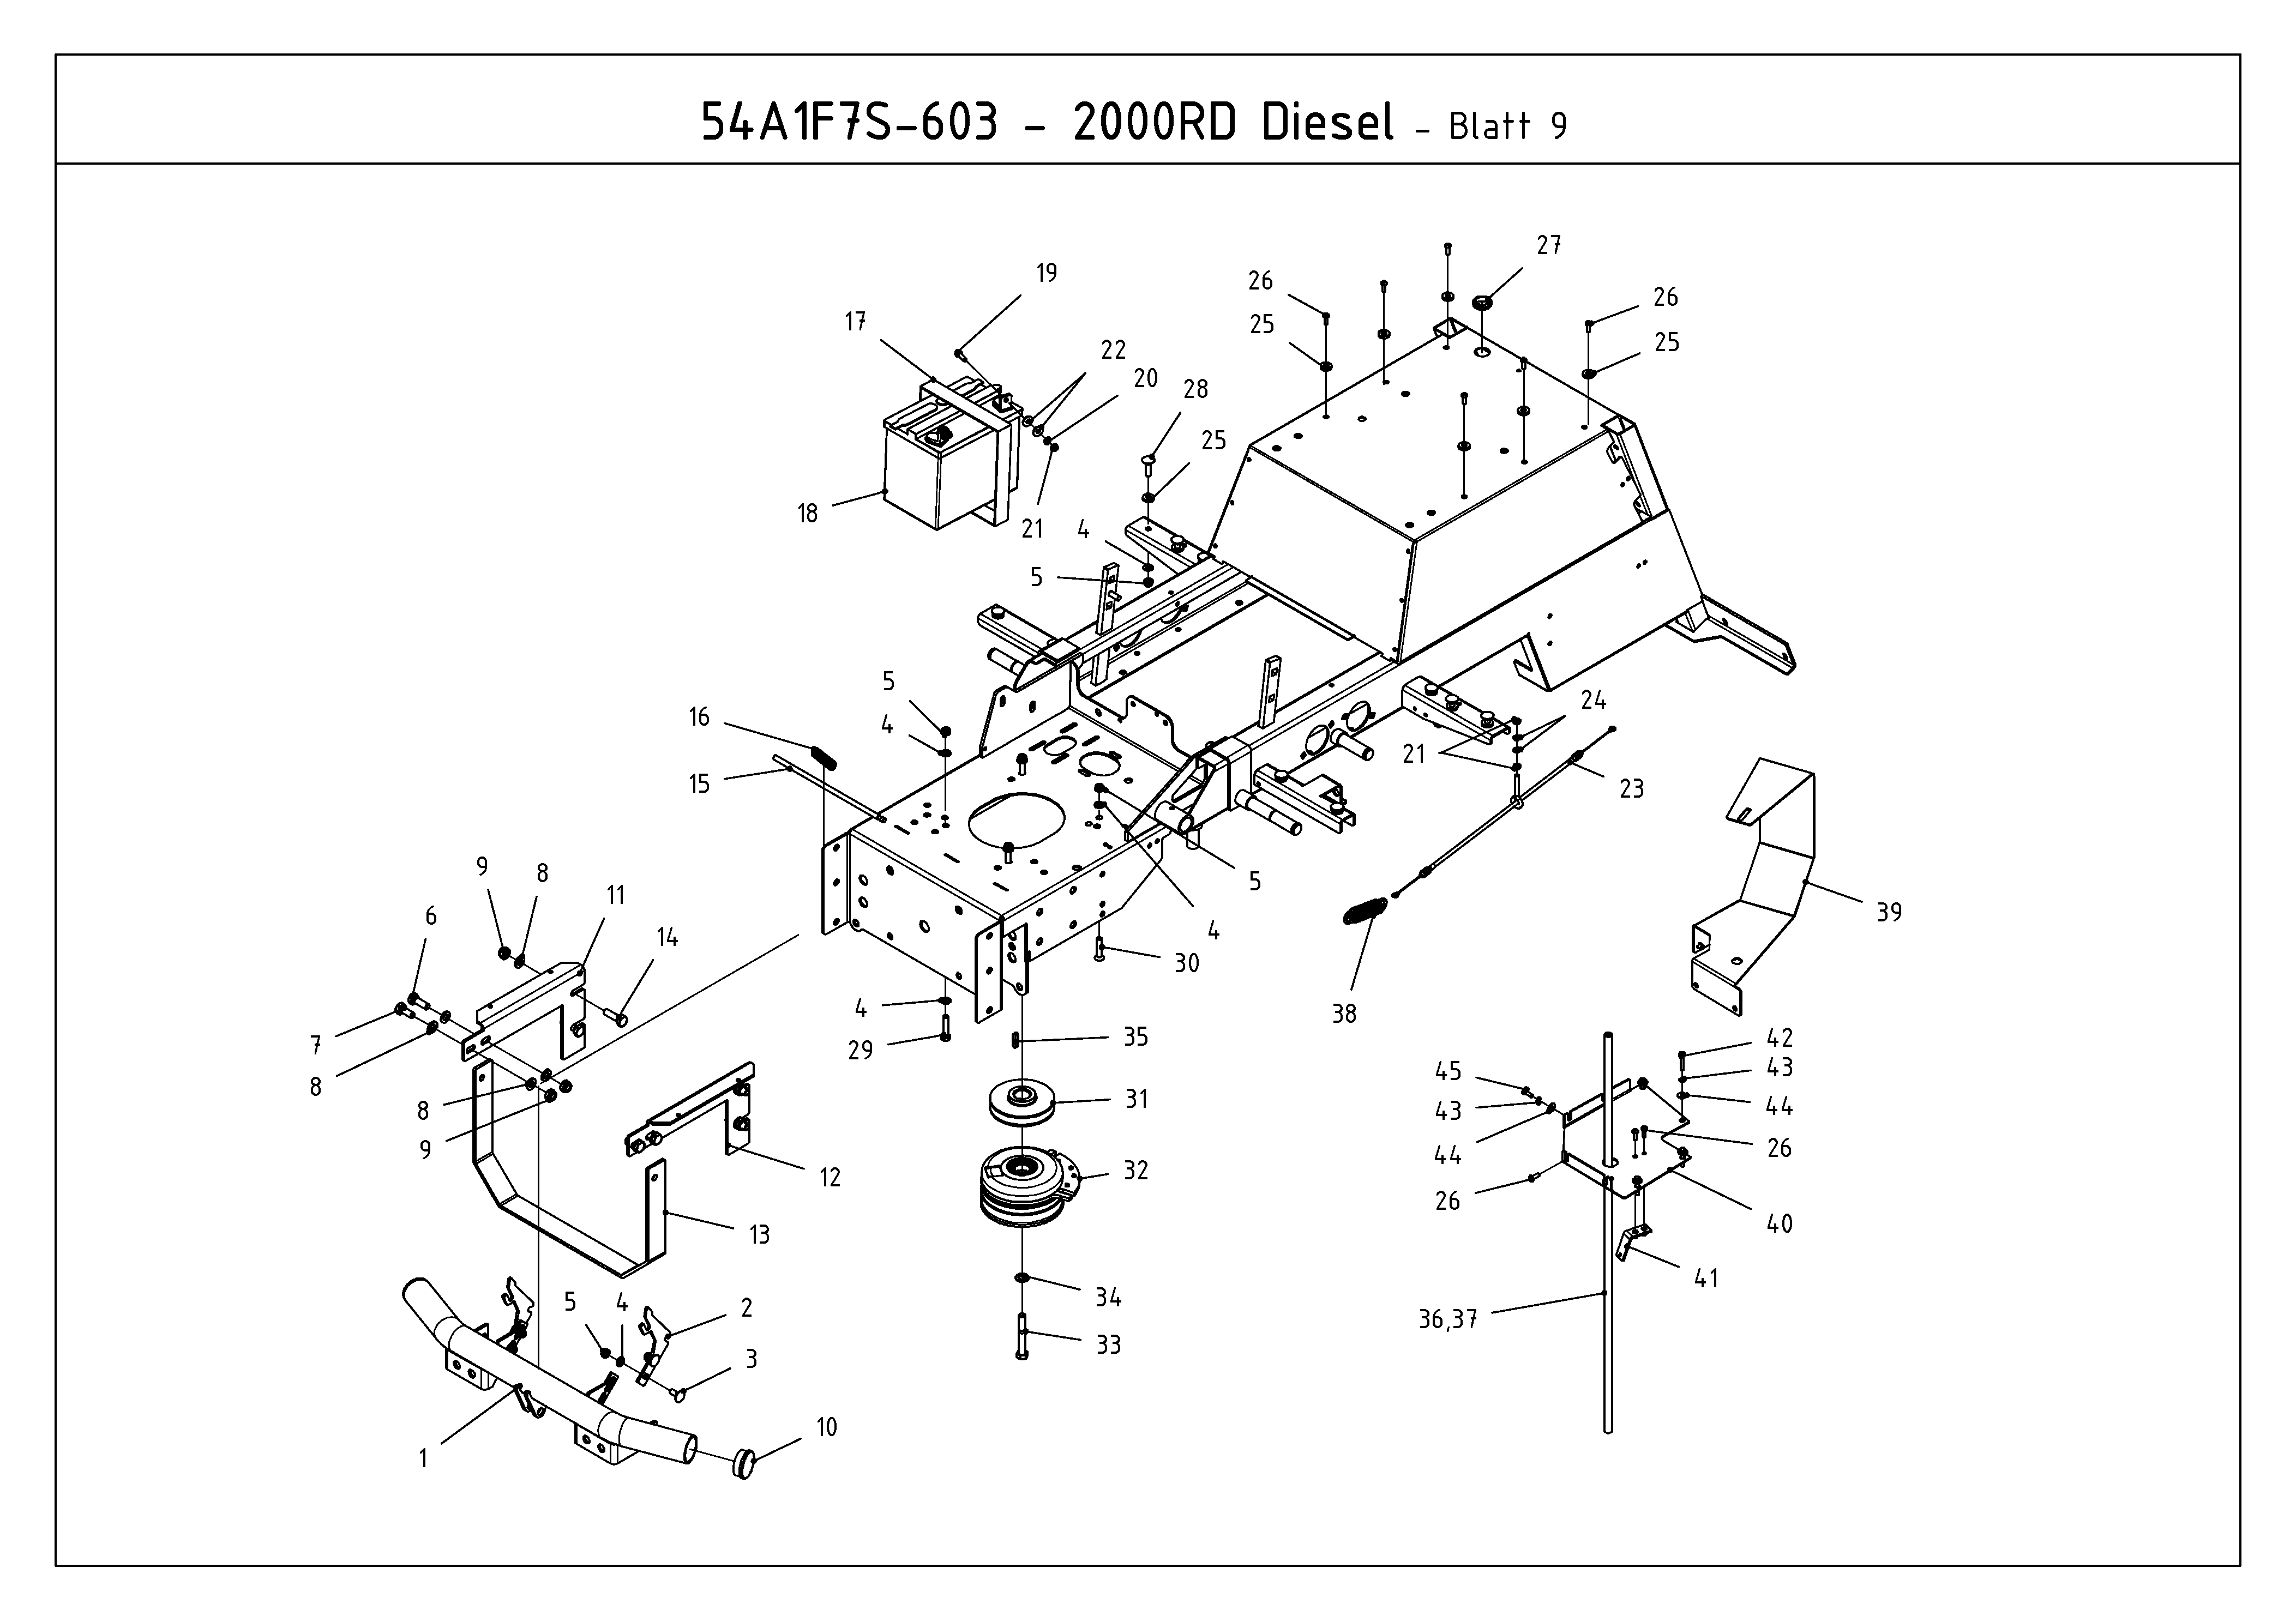 Cub Cadet, Kompakttraktoren, CC 2000 RD, 54A1F7S-603 (2010), Batterie, Elektromagentkupplung, MTD Ersatzteil-Zeichnungen